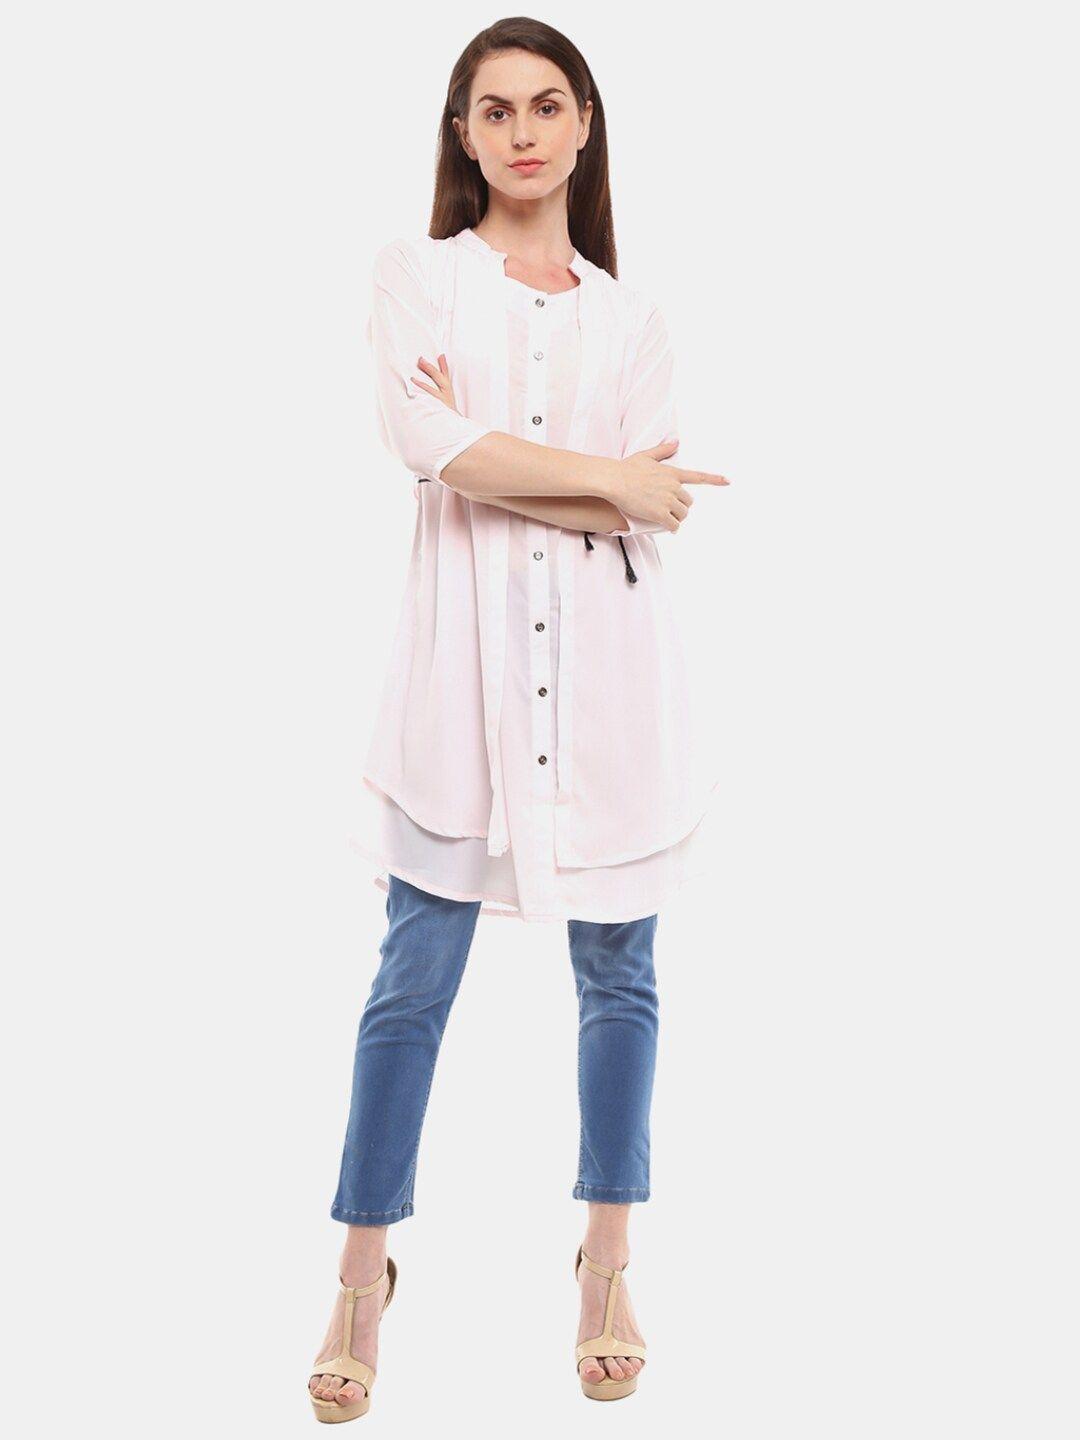 v-mart women western solid pink shirt style longline top